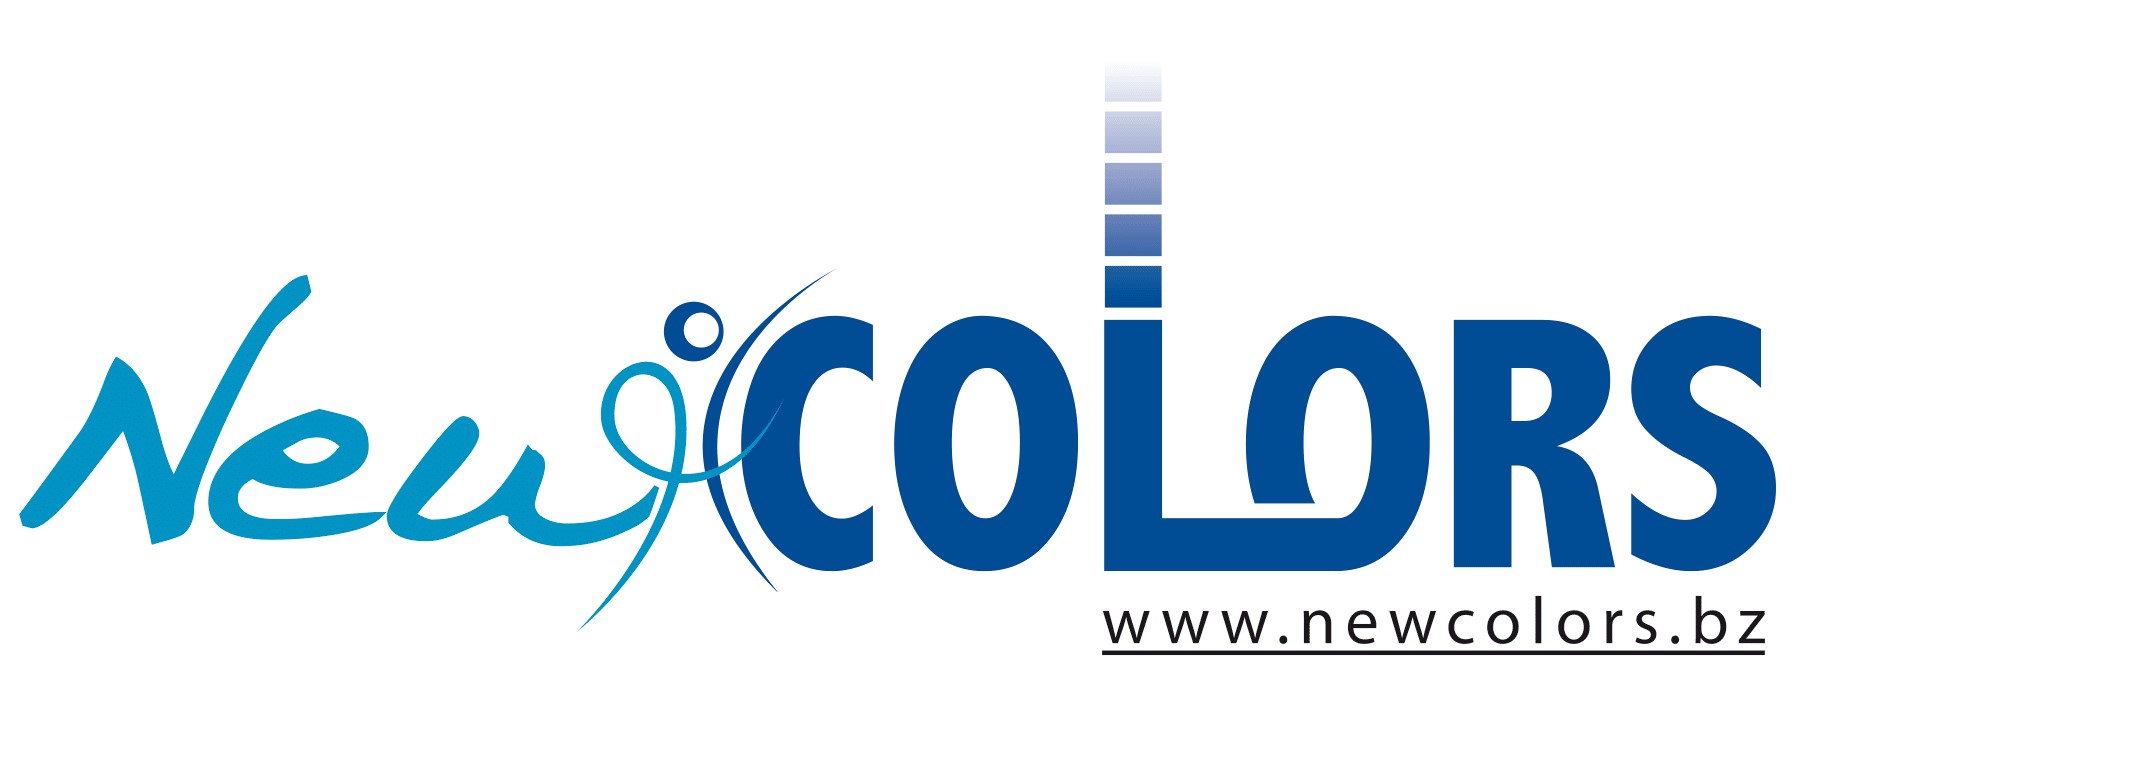 New Colors Logo Vektor Maler 2